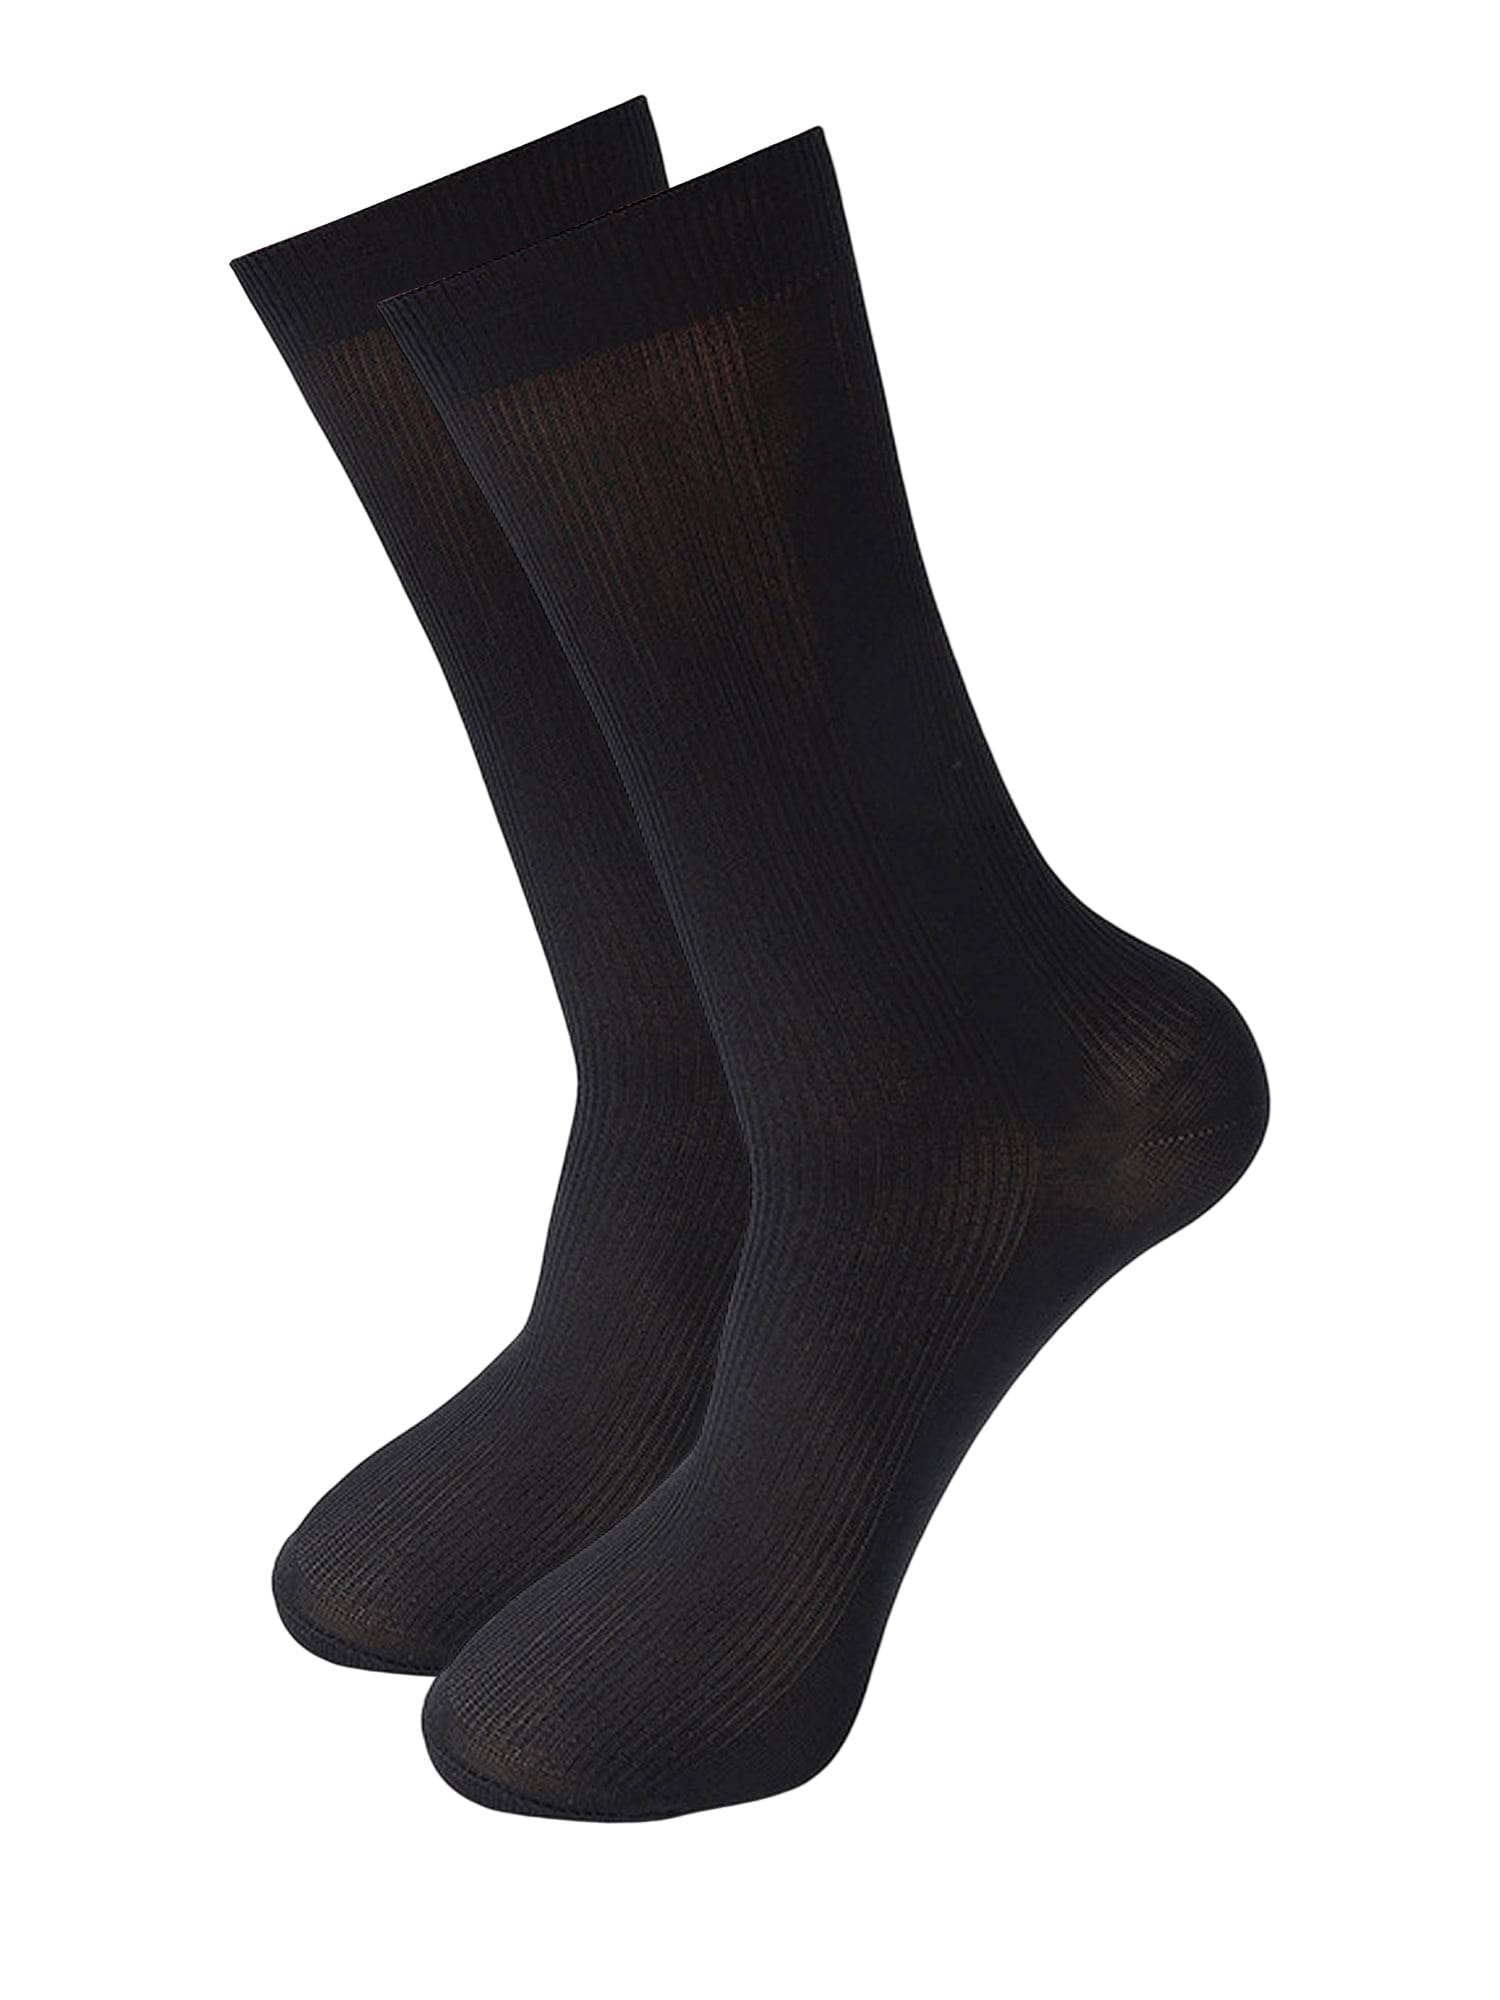 Hanerdun Men Thin Socks Crew Socks, 12-Pack, Black/ Coffee/ Navy Blue ...